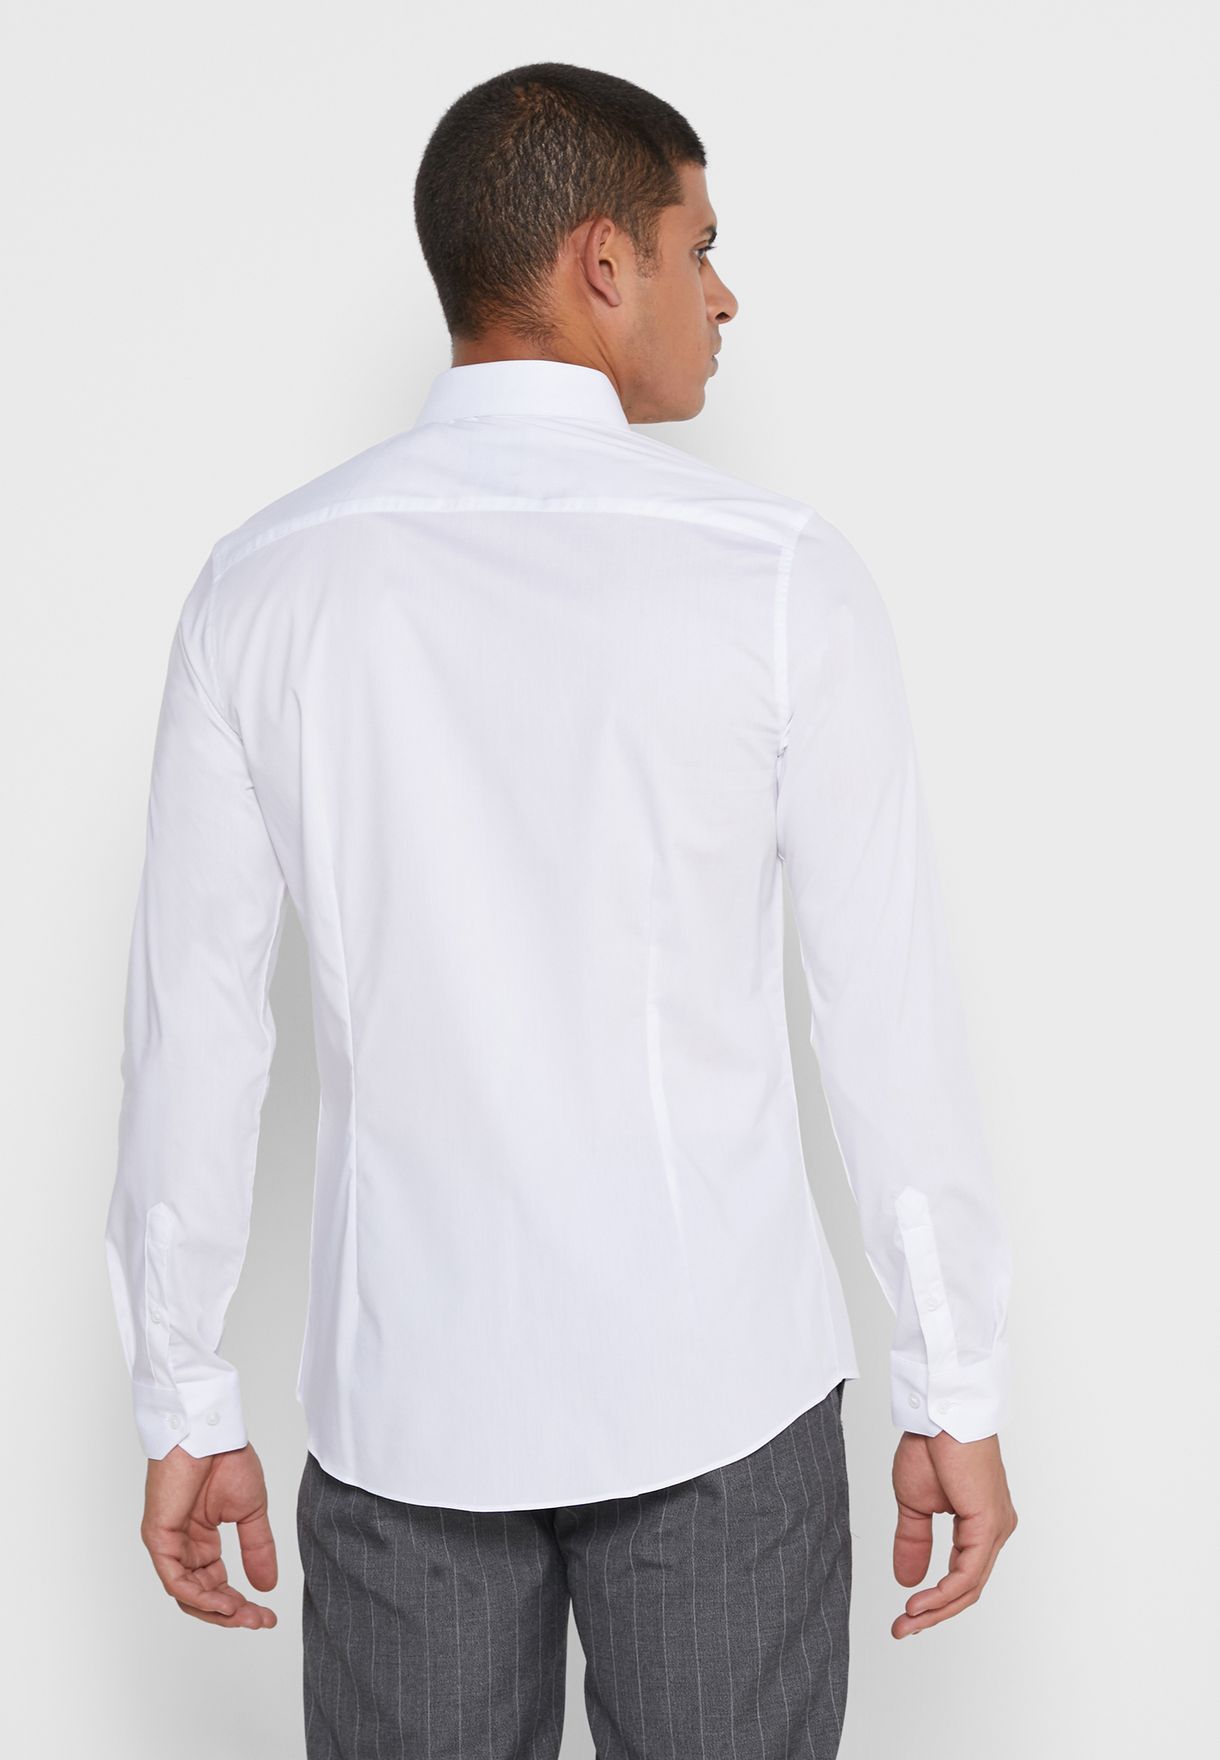 stretchable formal shirts